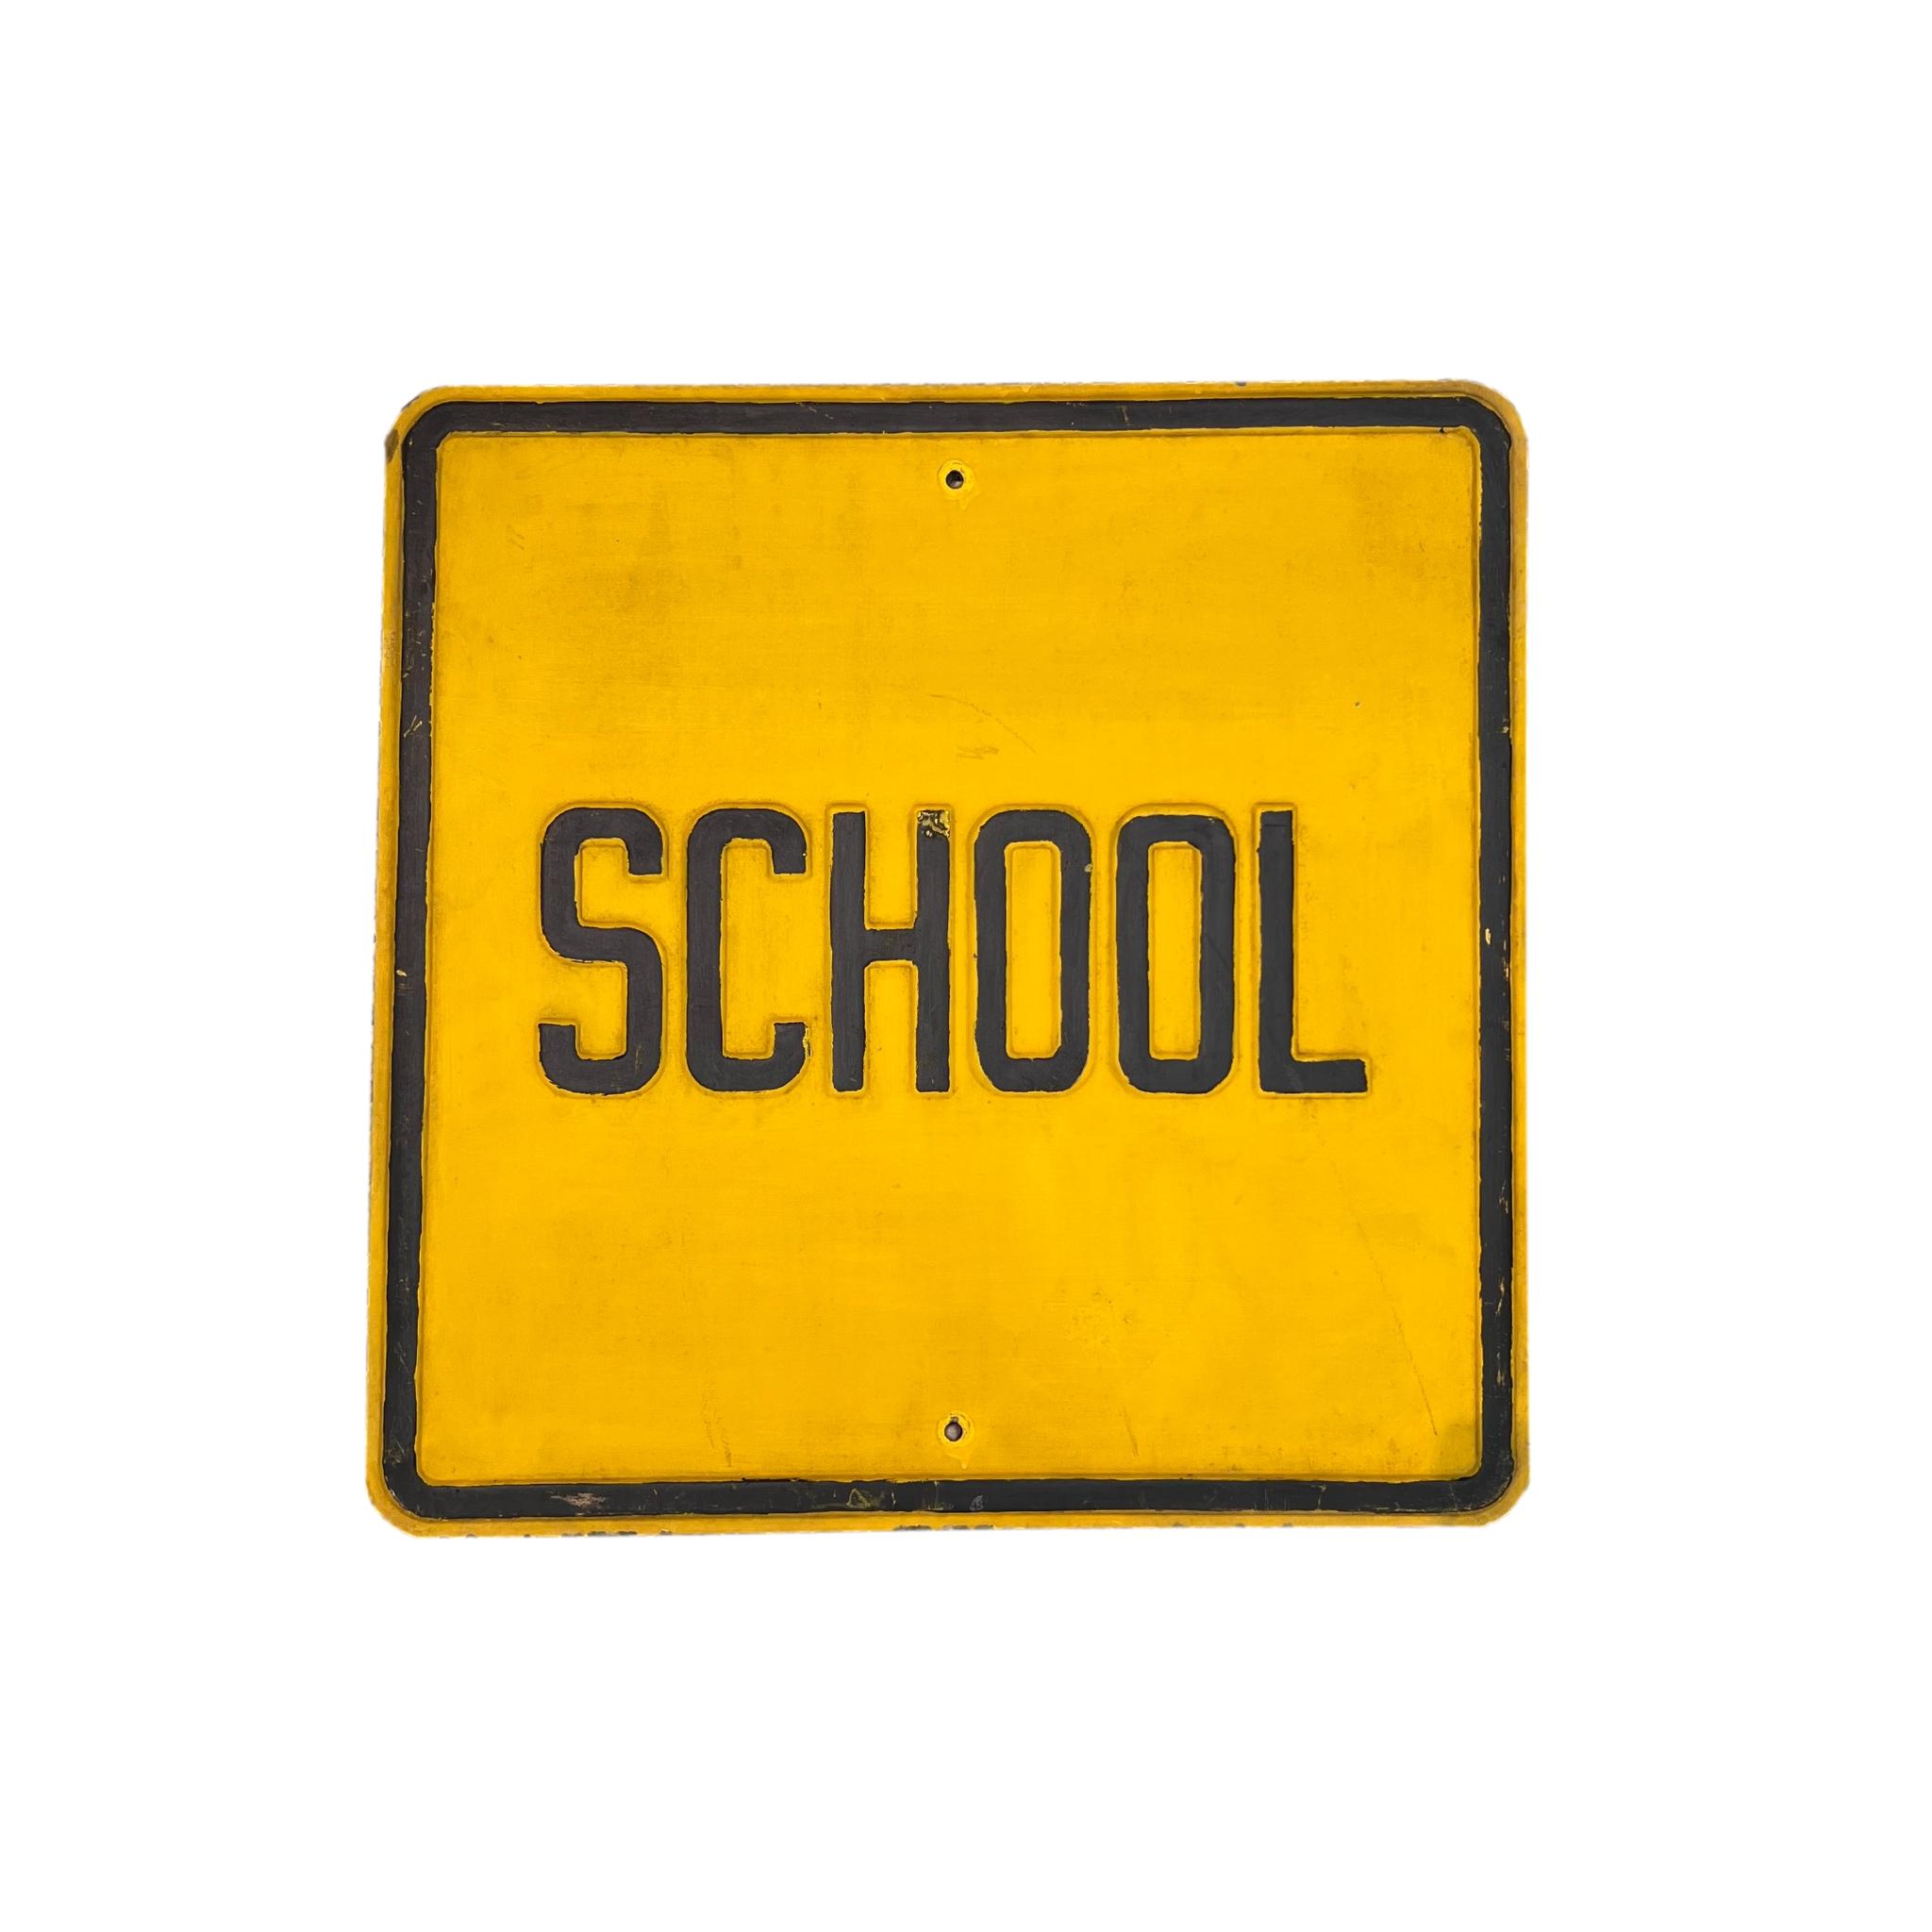 Vintage School Sign, 1960s USA